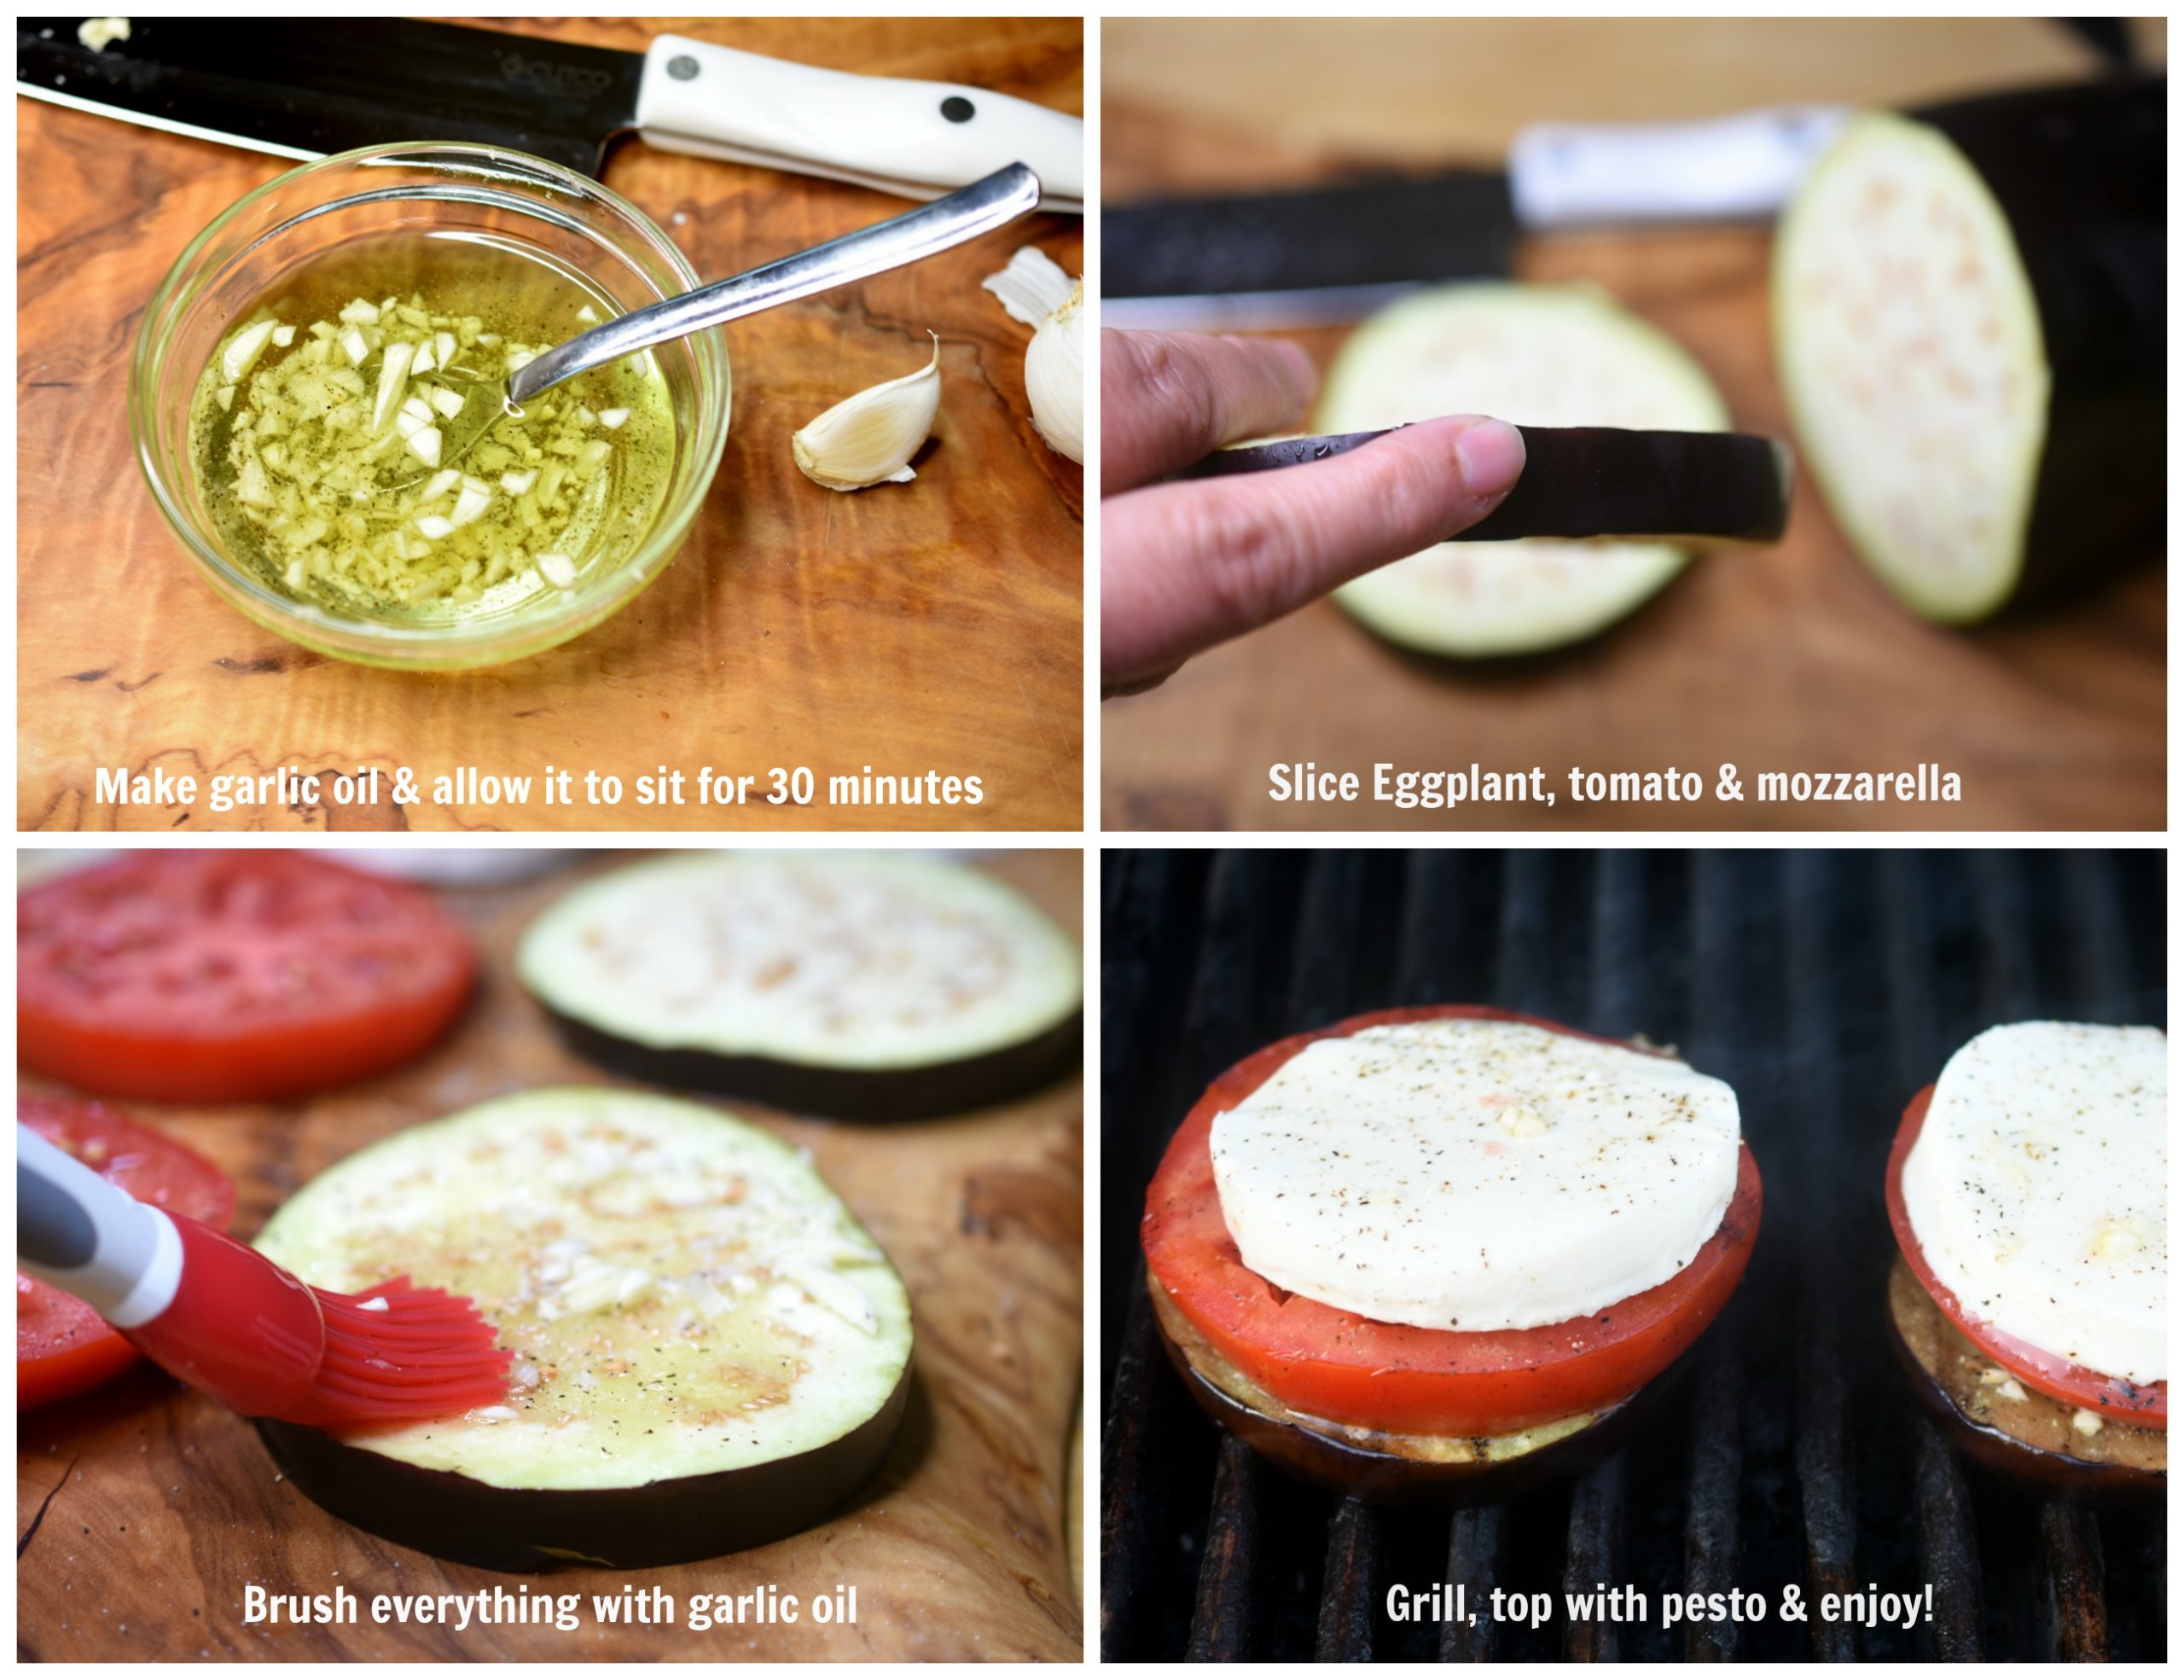 How to grill eggplant tomato mozzarella stacks